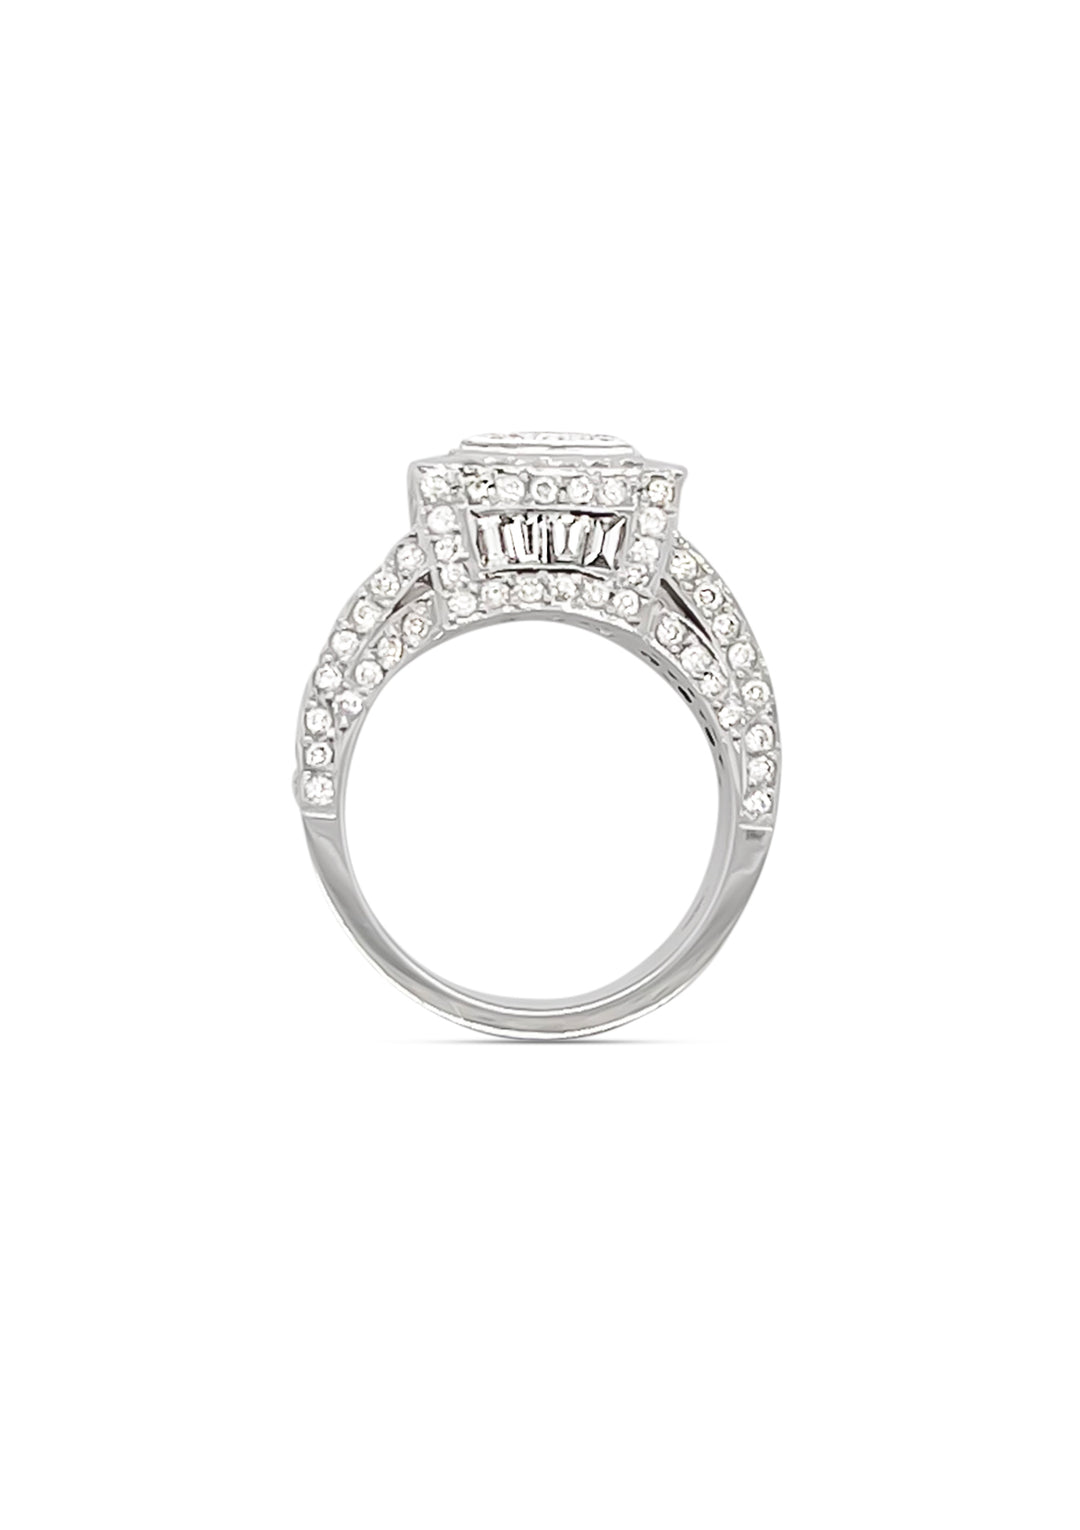 18K White Gold 0.77 Carat Princess Cut Diamond Accented Ring